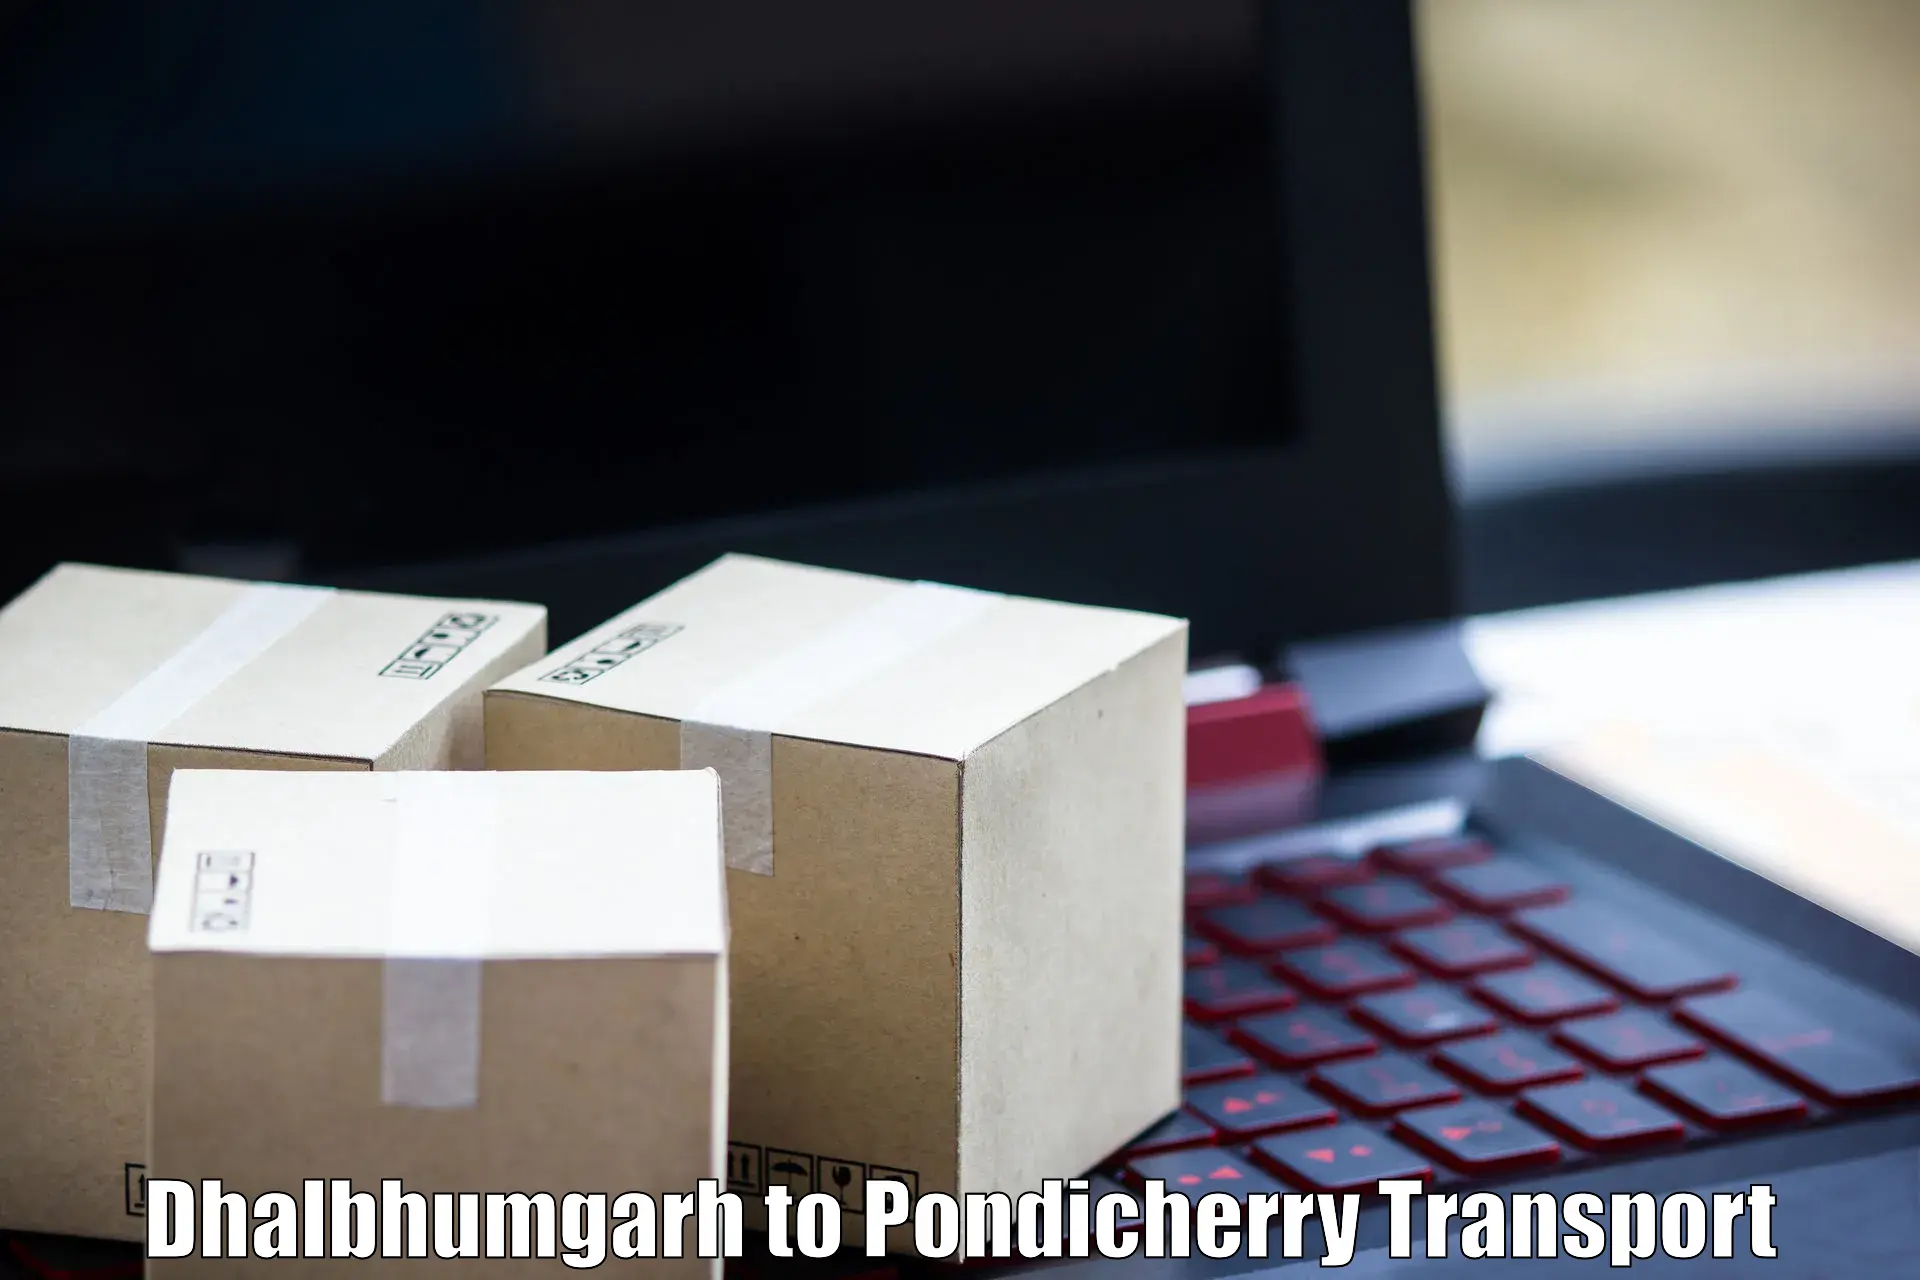 Commercial transport service Dhalbhumgarh to Pondicherry